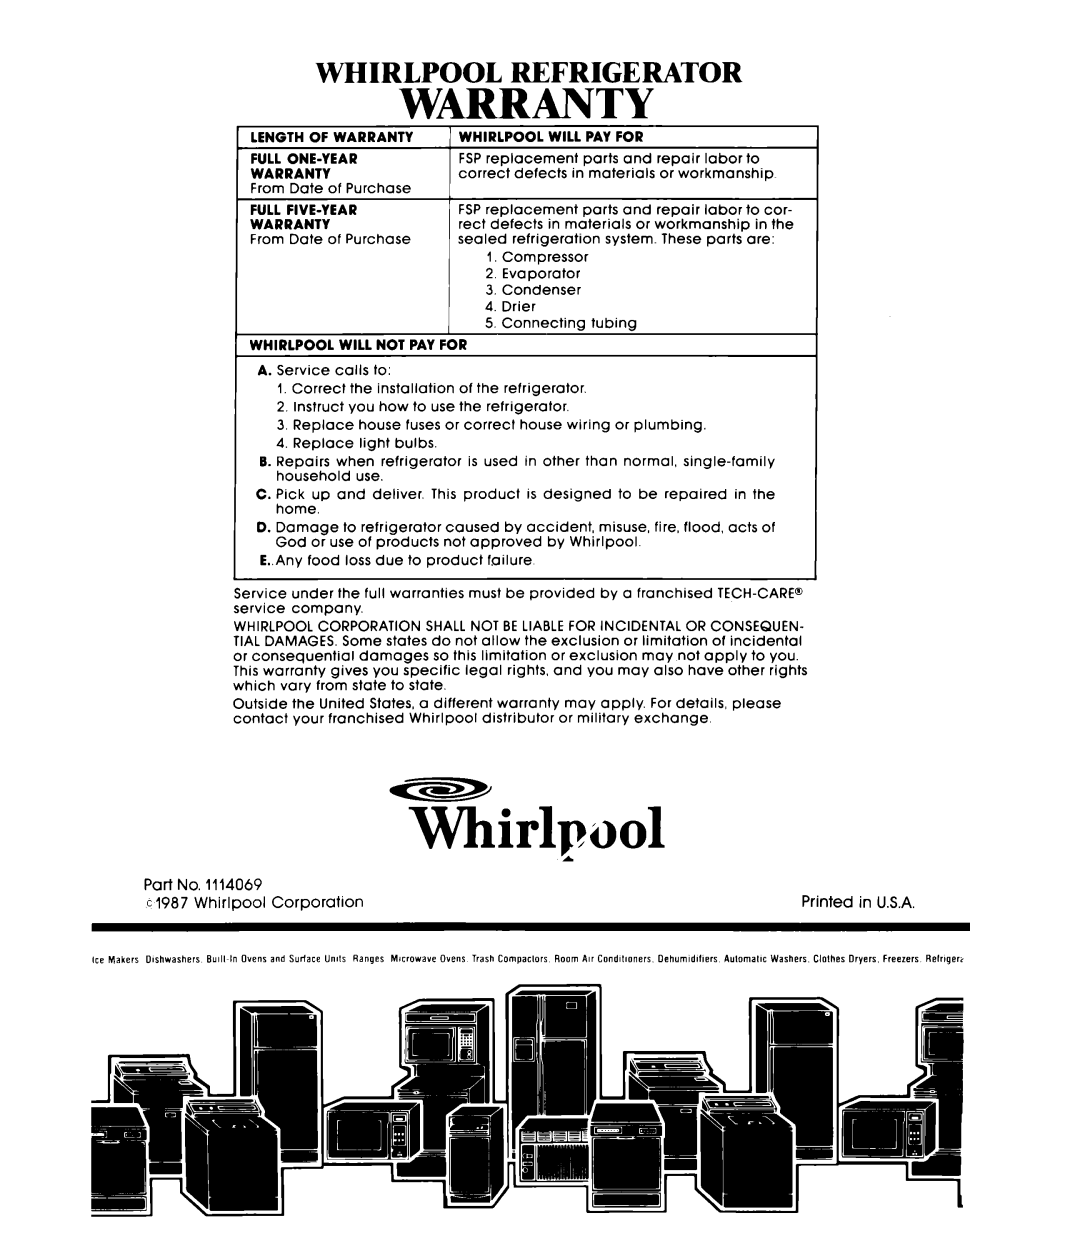 Whirlpool EF19MK manual Whirlp001, Warranty, Whirlpool Refrigerator 